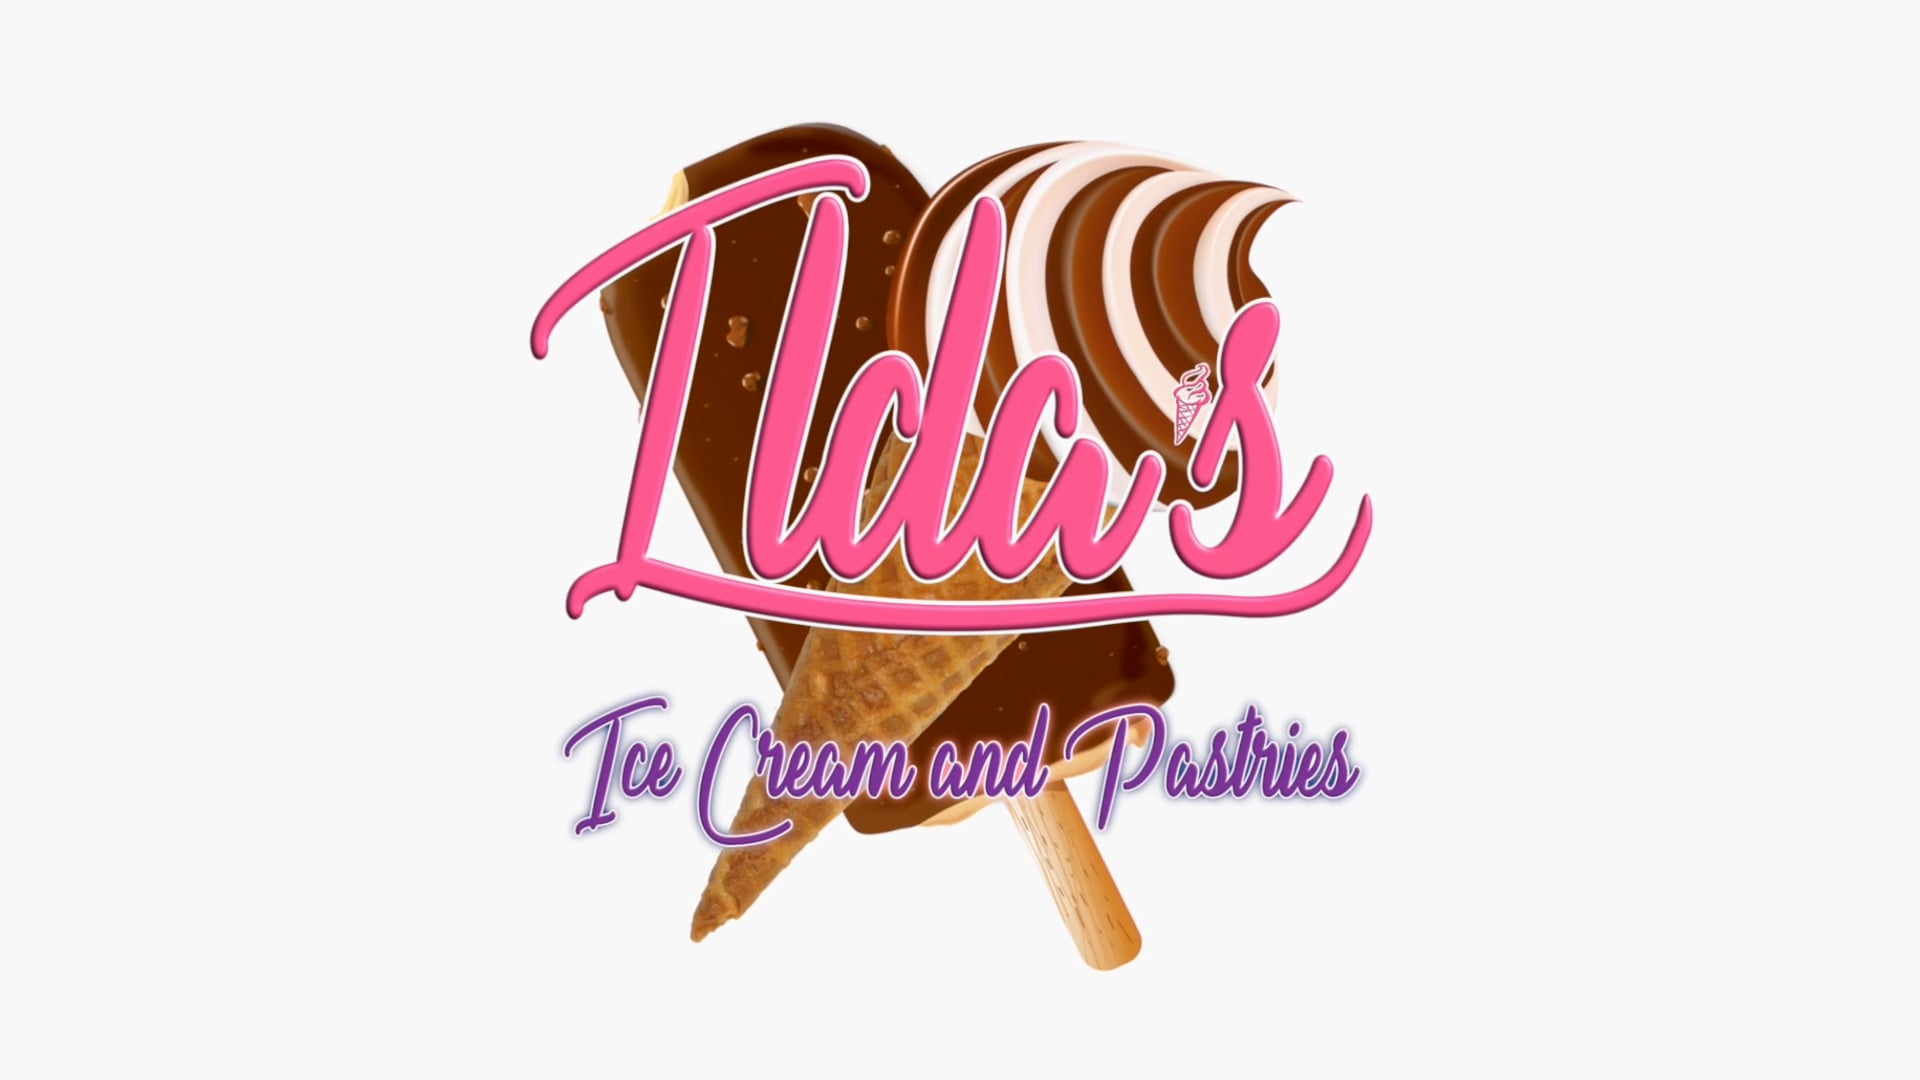 Ilda’s Ice Cream and Pastries Ice Cream